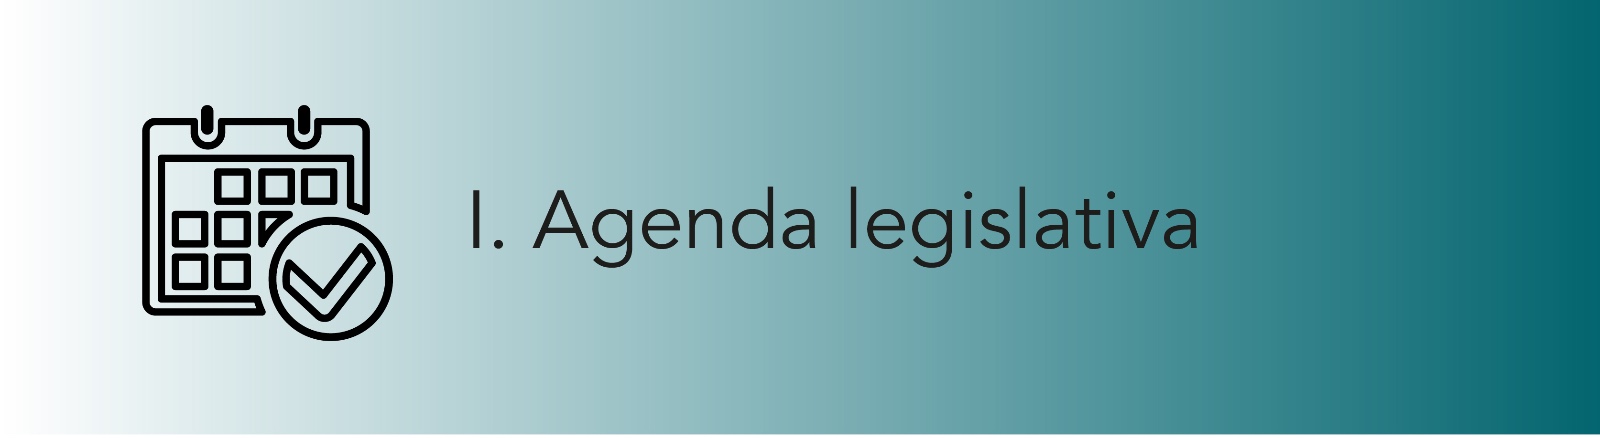 Imagen que permite conocer la Agenda legislativa